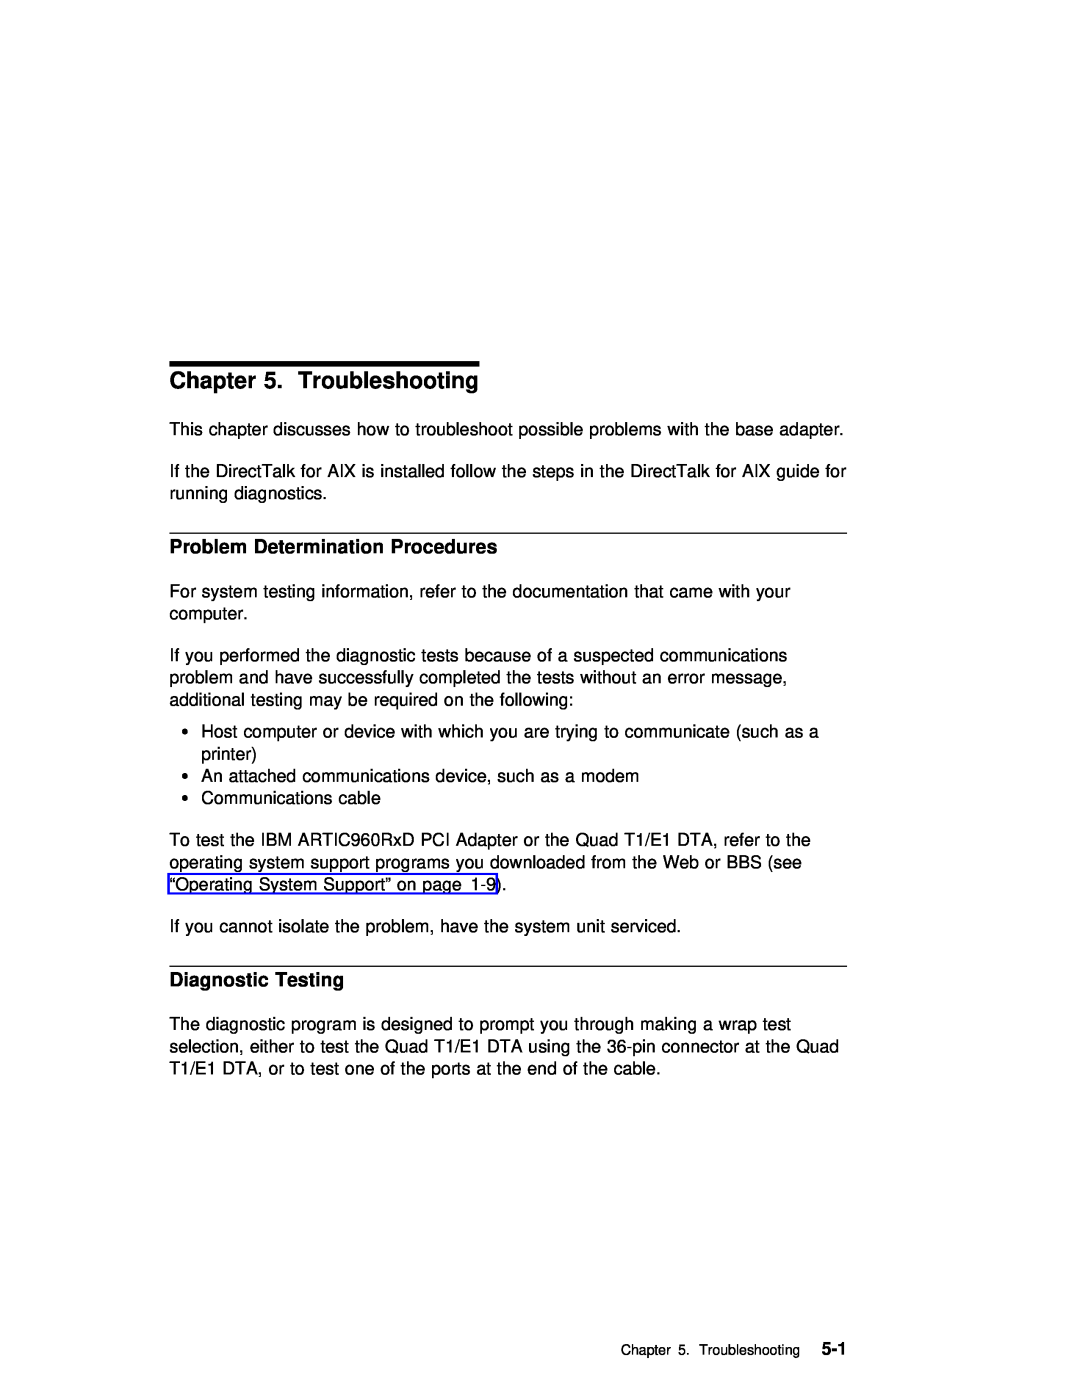 IBM ARTIC960RxD manual Troubleshooting, Problem Determination Procedures, Diagnostic Testing 